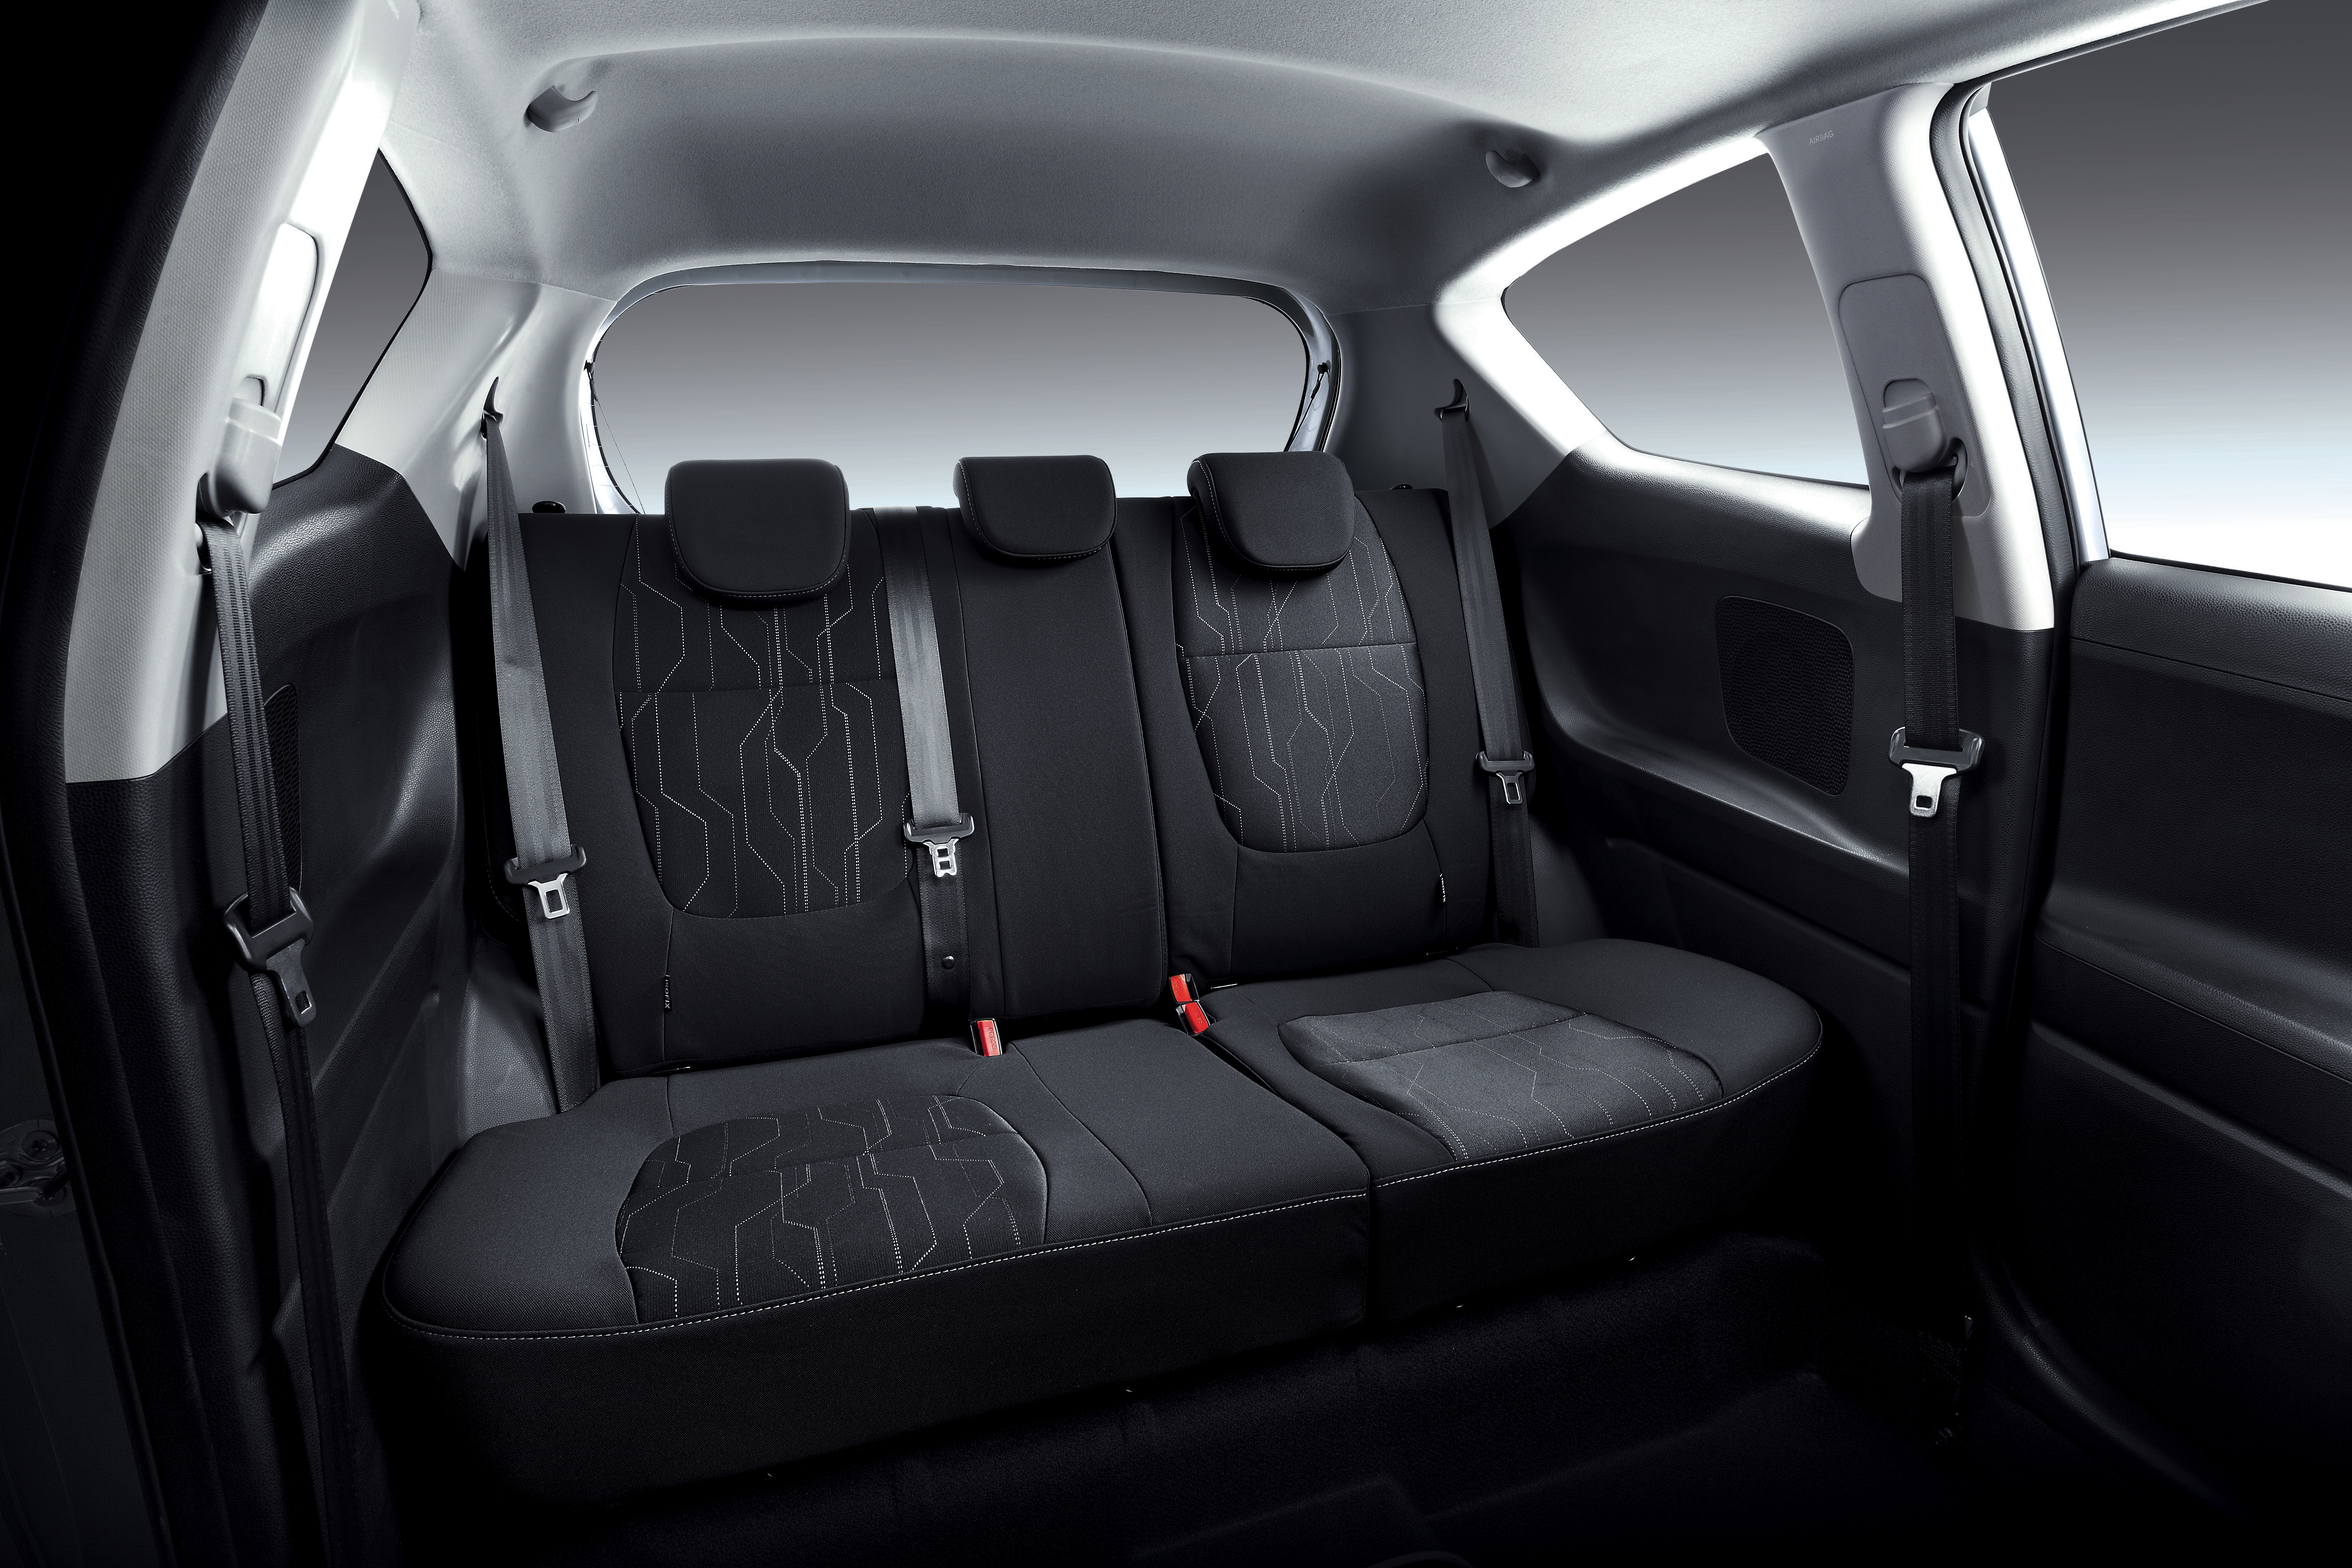 Kia All New Picanto 3door rear seat | Flickr - Photo Sharing!